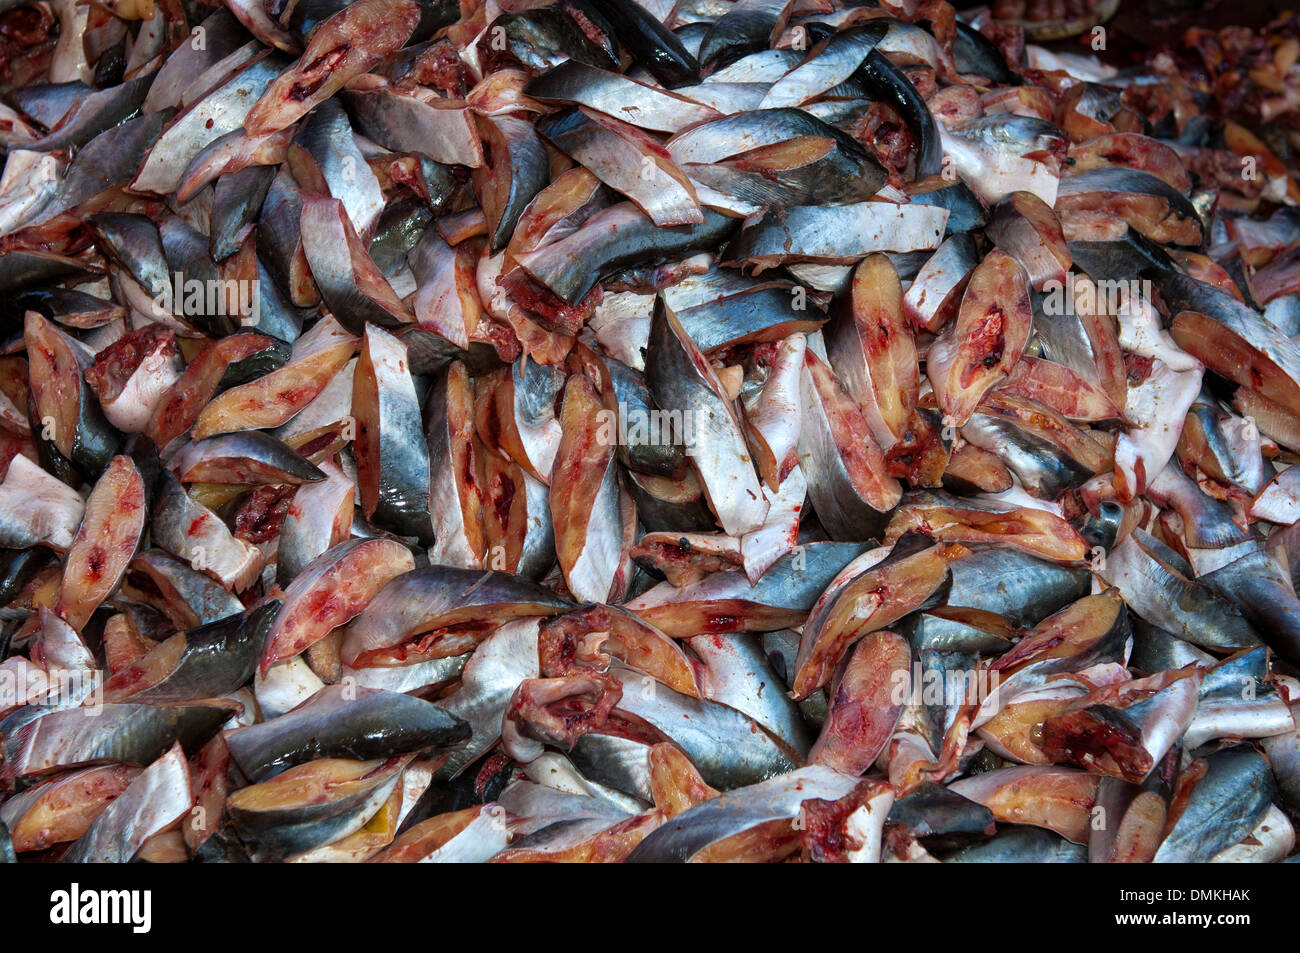 Chops of fresh fish on the fish market, Battambang, Cambodia Stock Photo